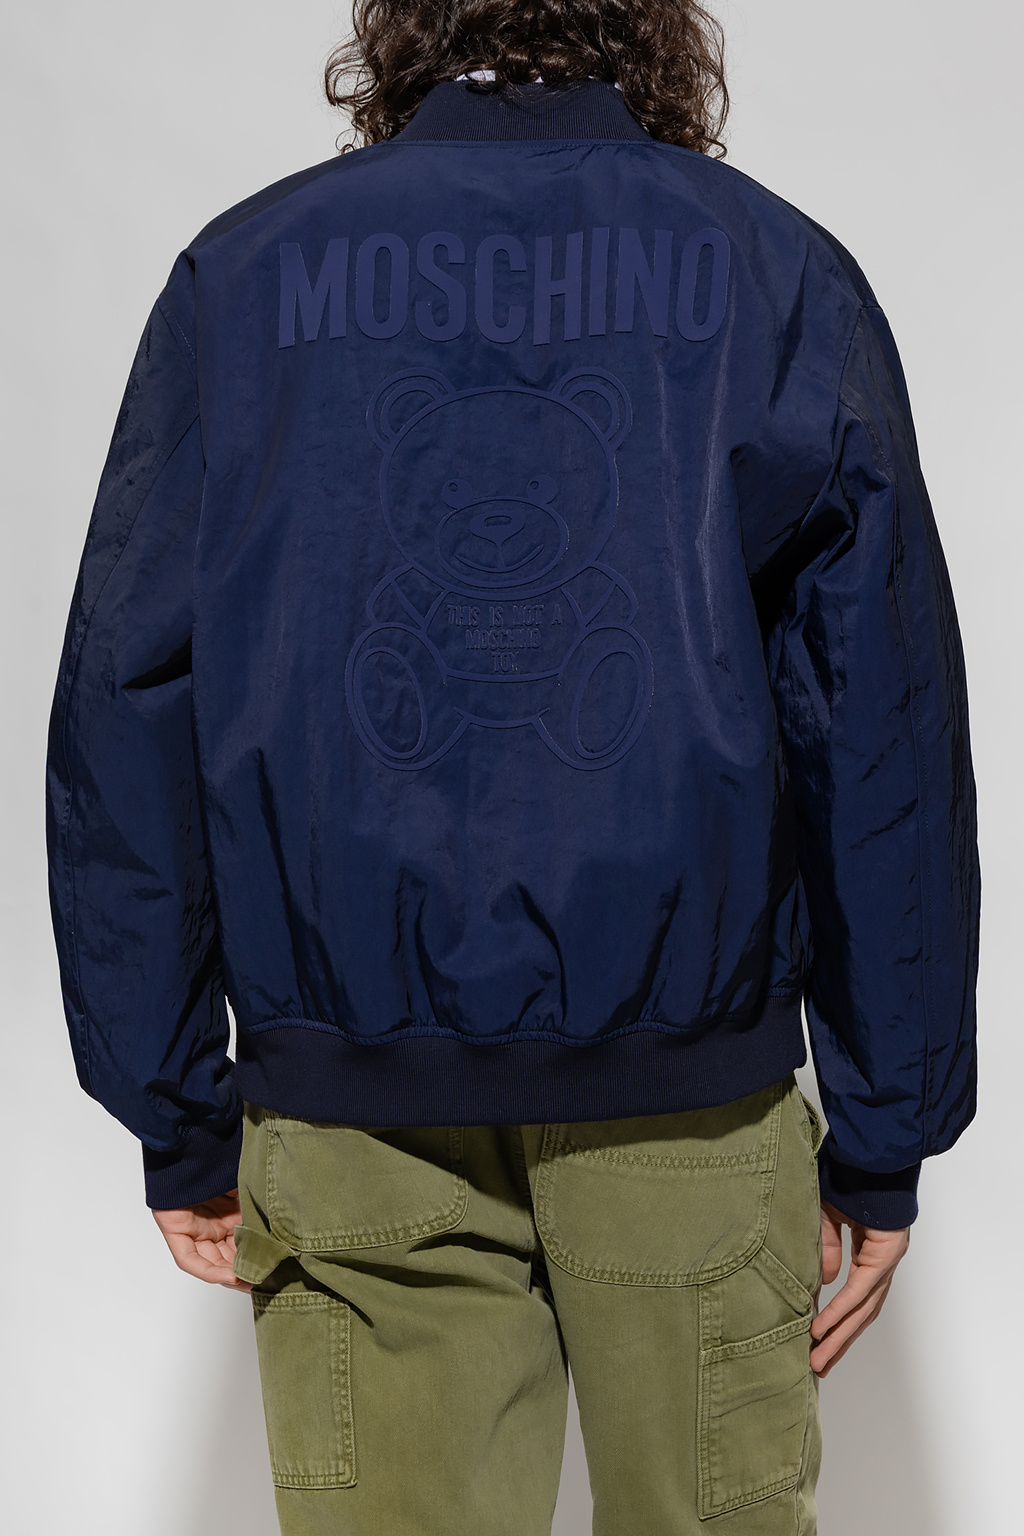 Moschino Bomber jacket with logo